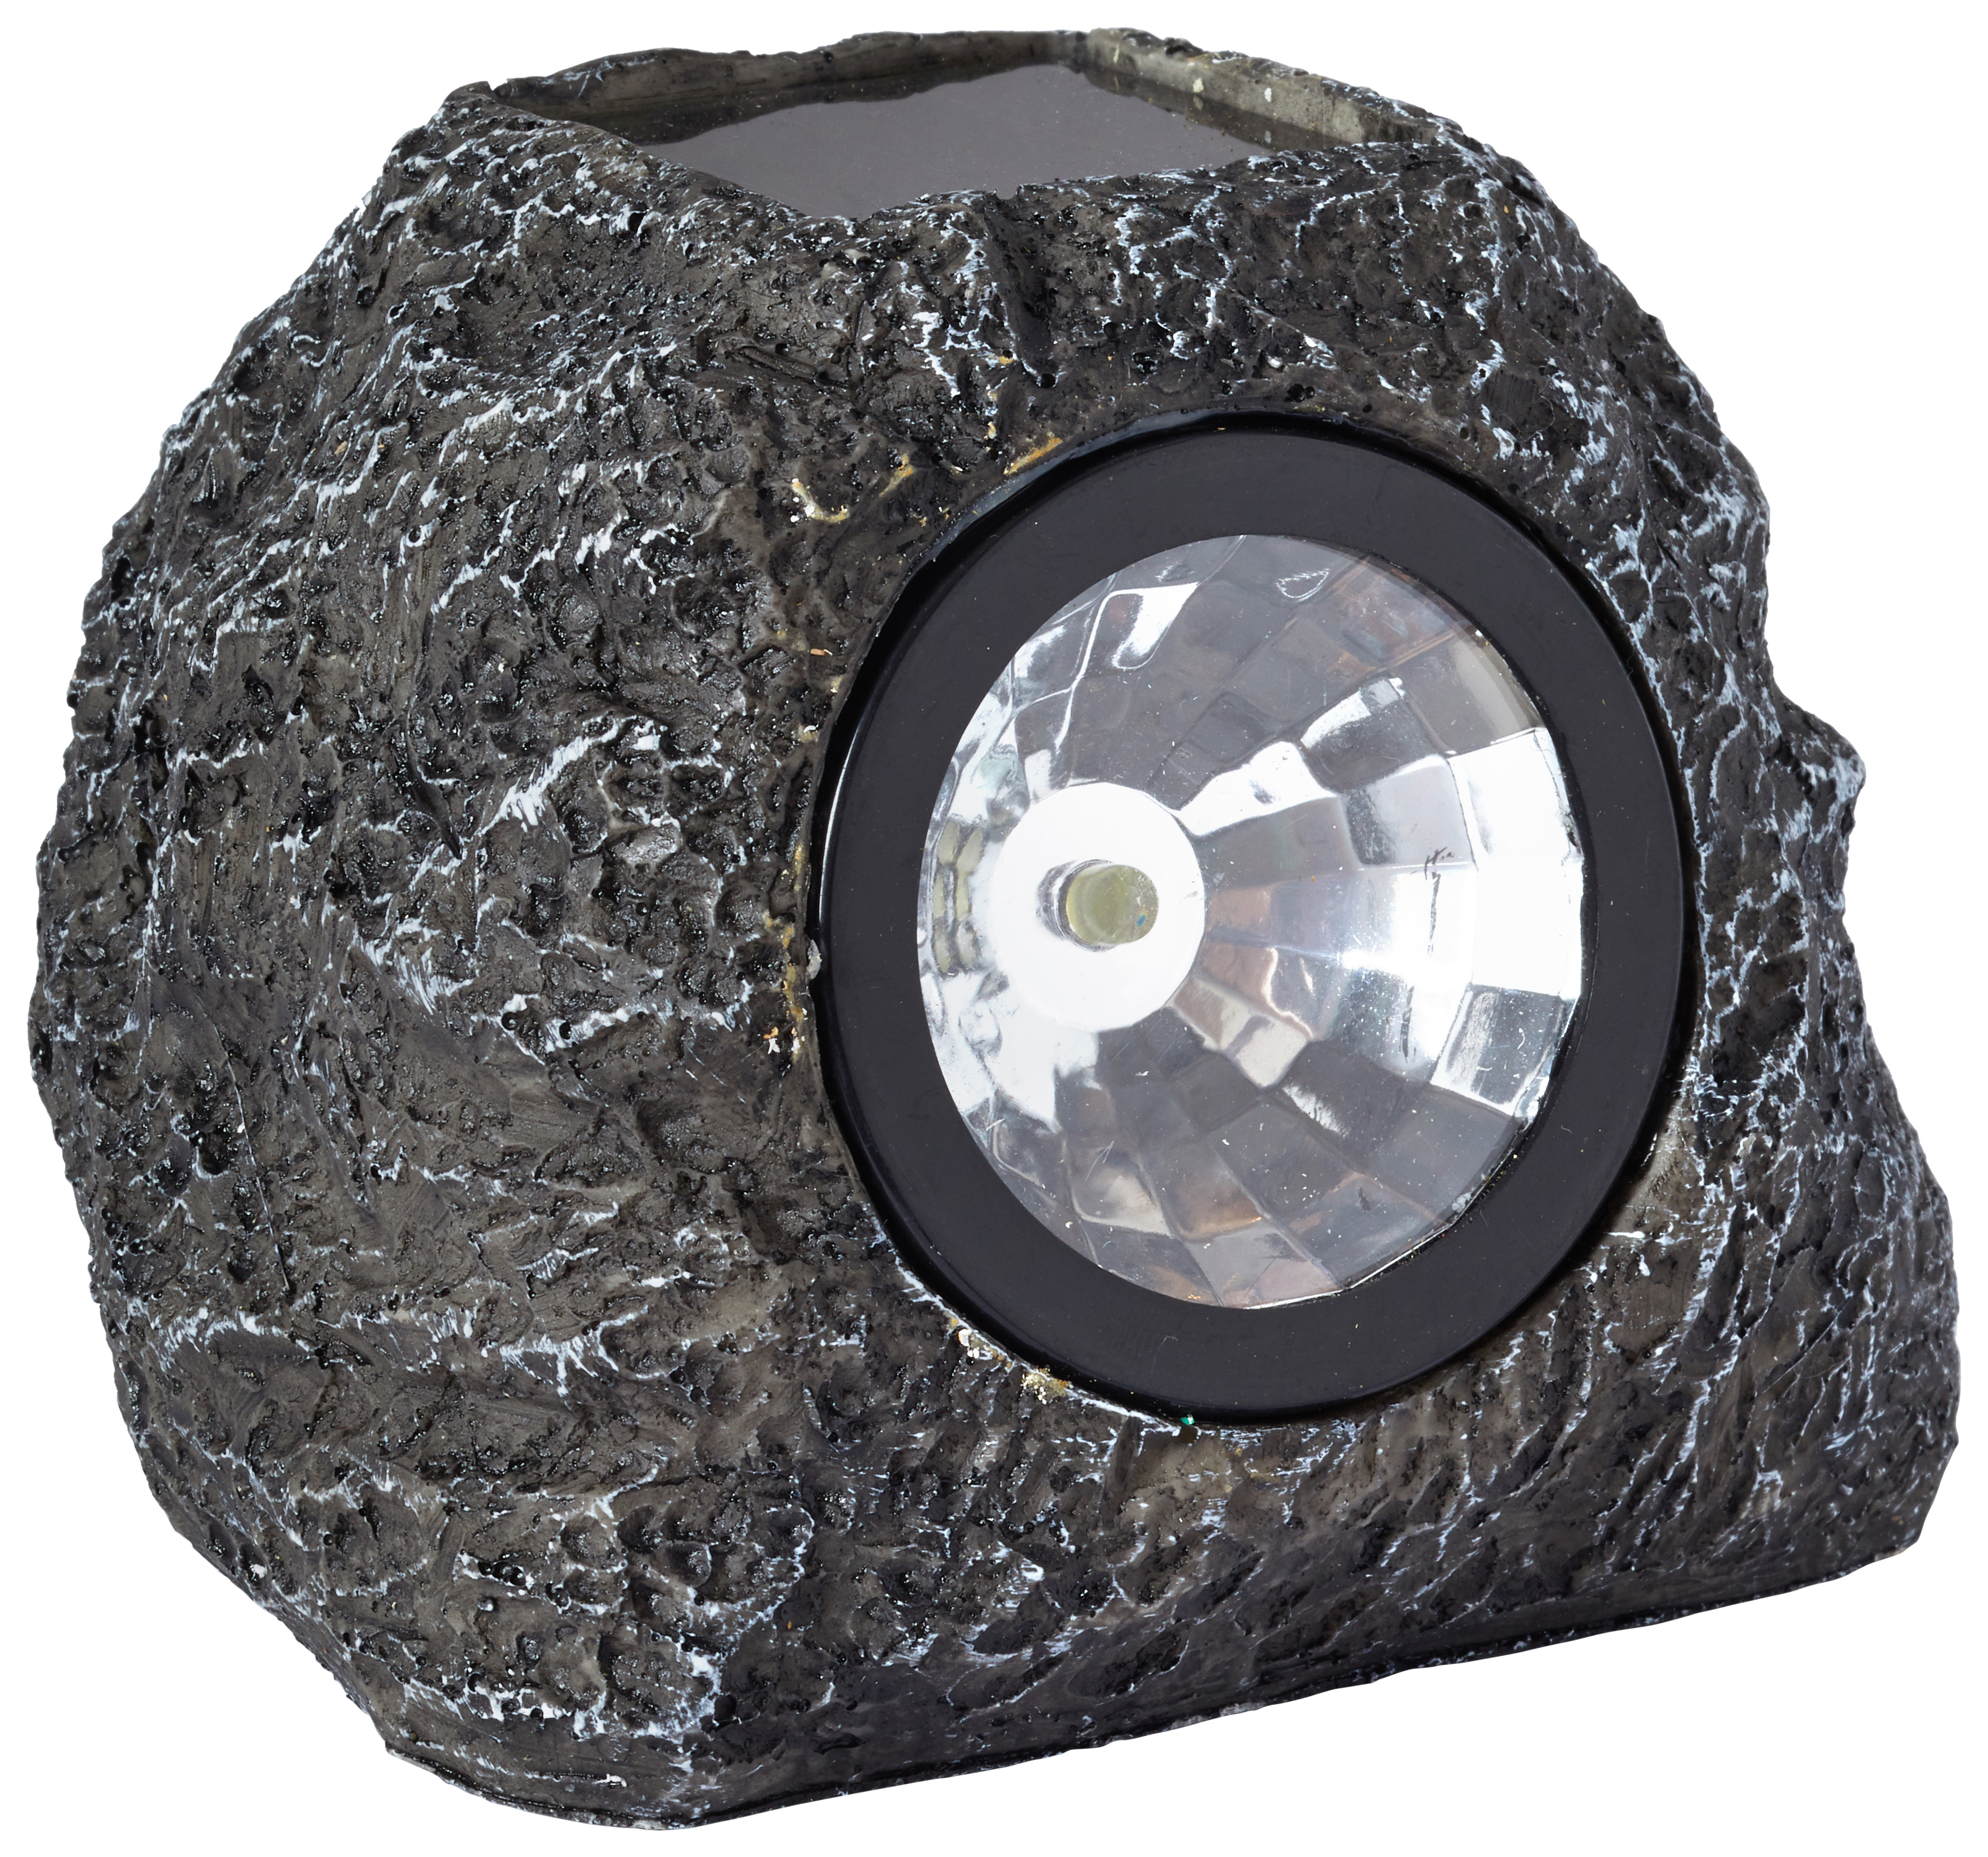 Smart Solar 3 Lumen Outdoor Rock Spotlights - Pack of 4